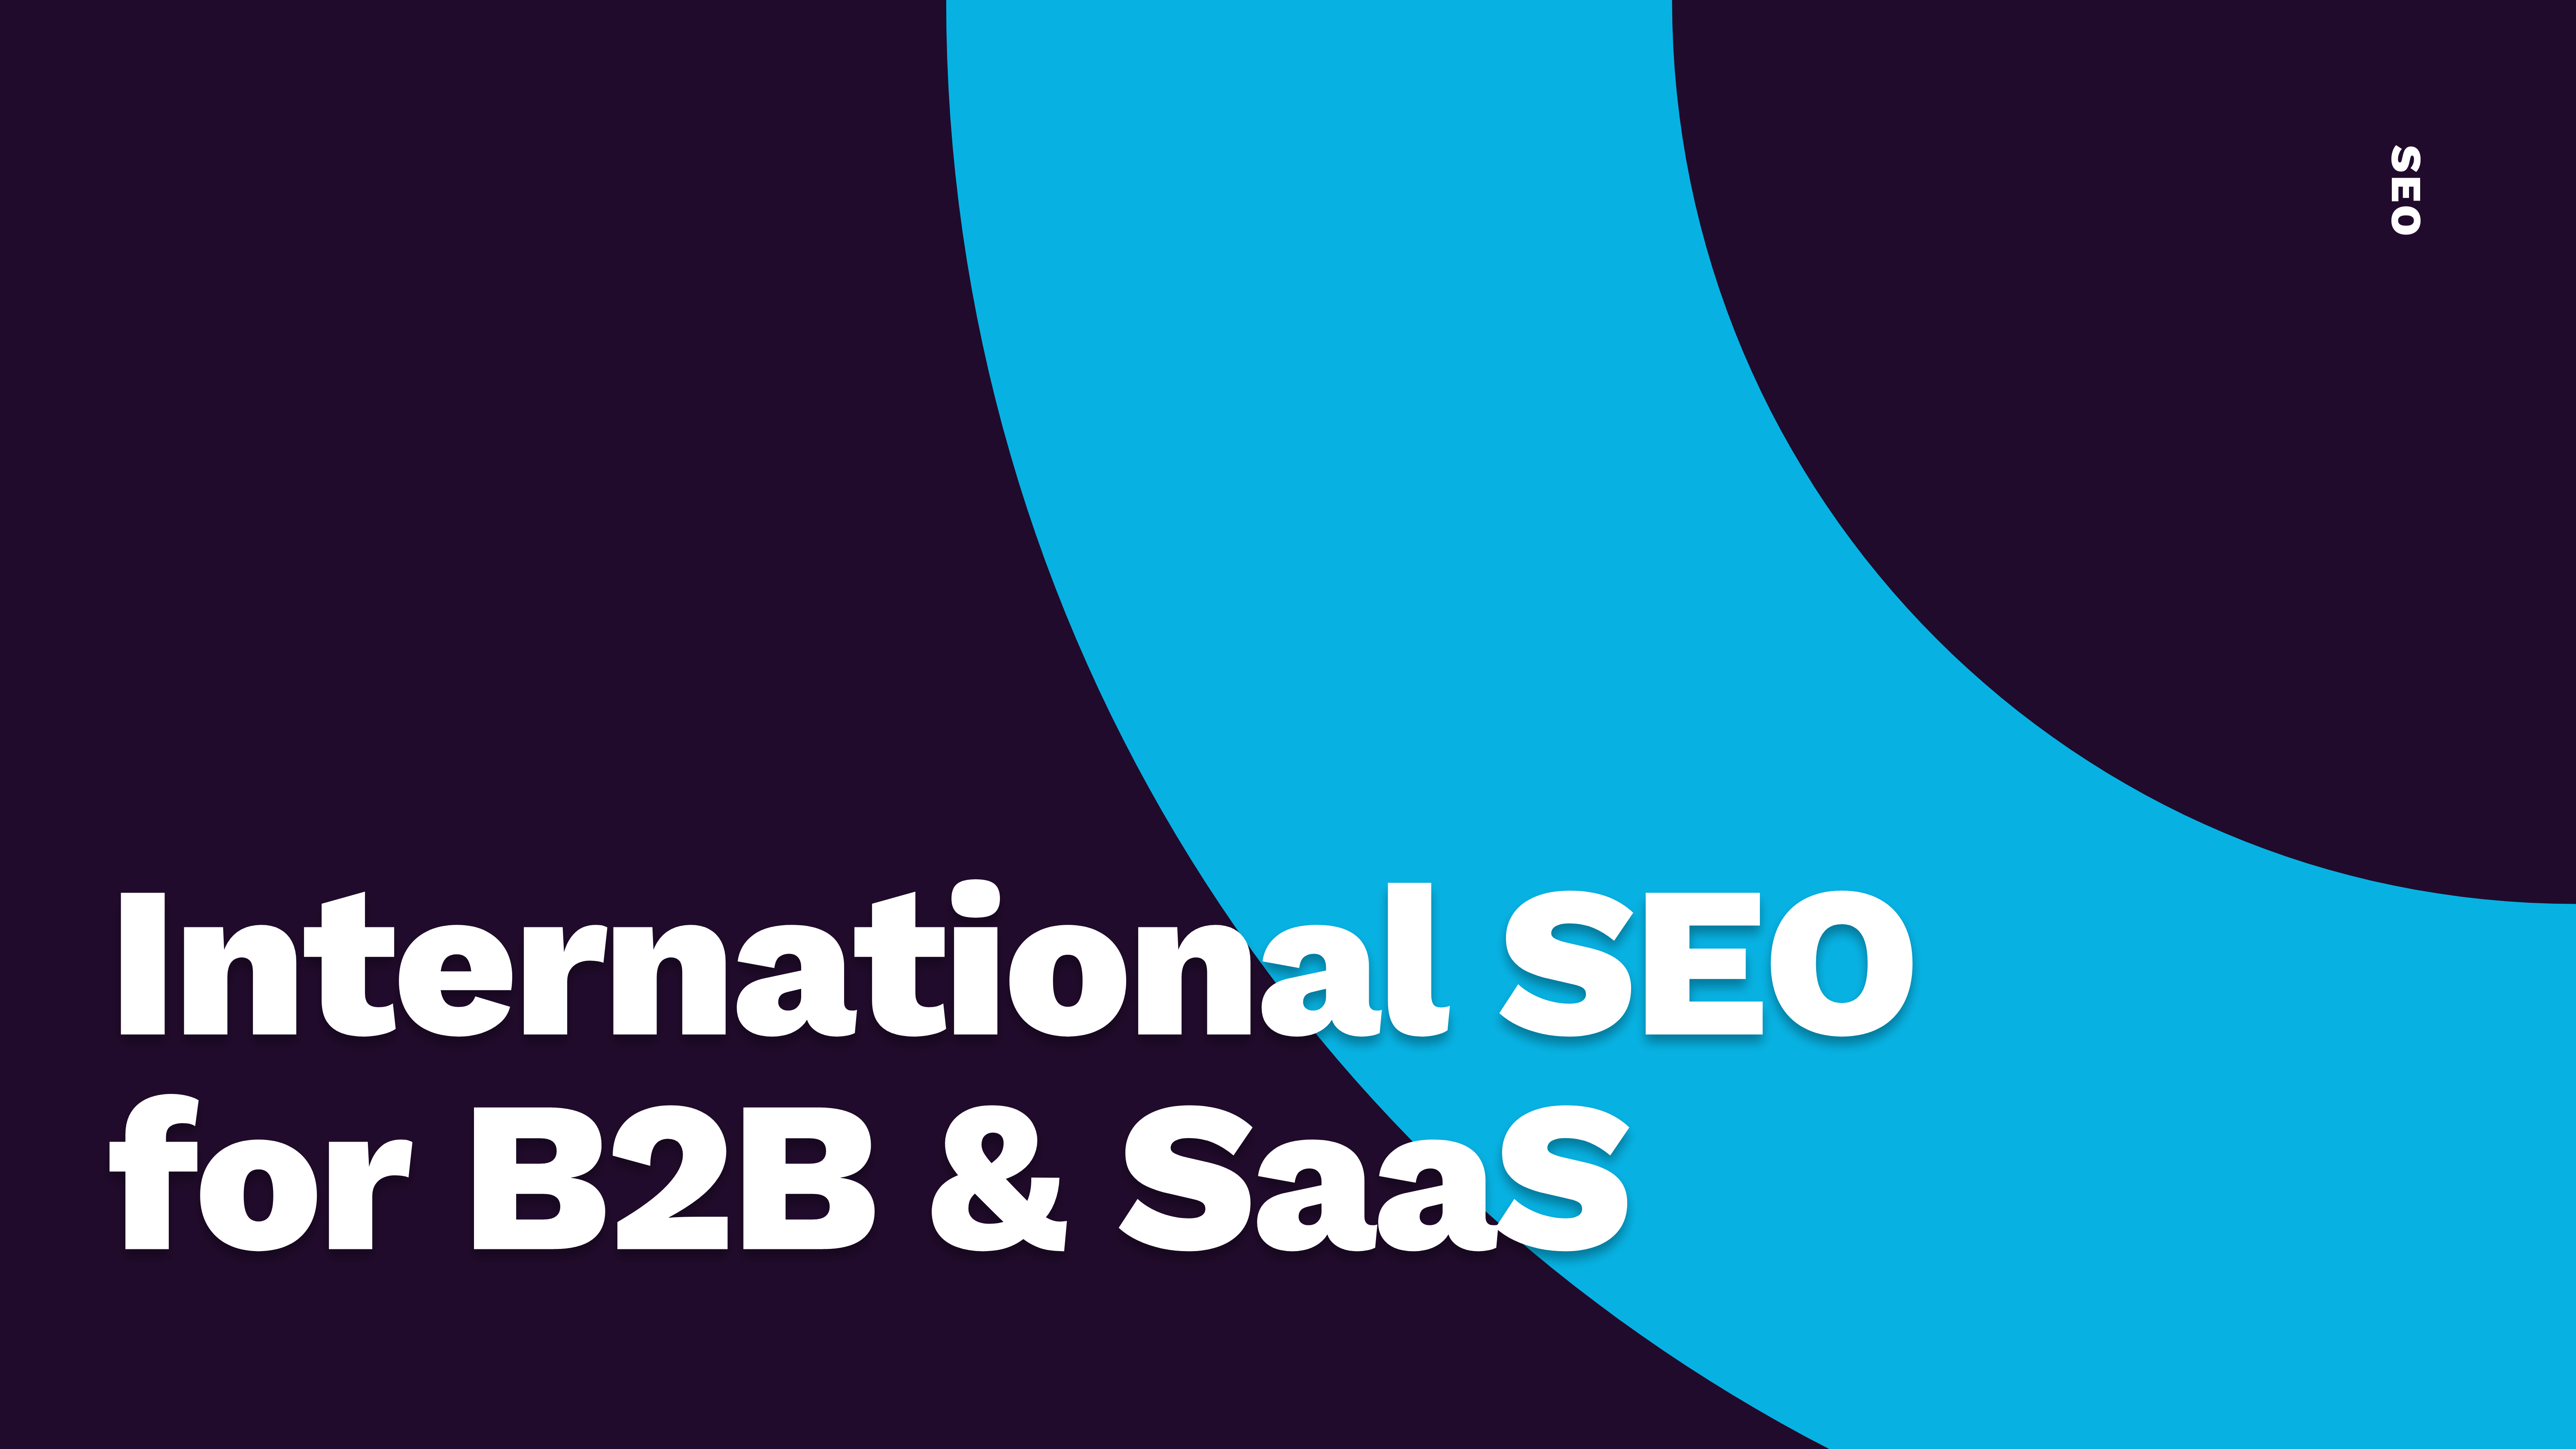 International SEO for B2B & SaaS